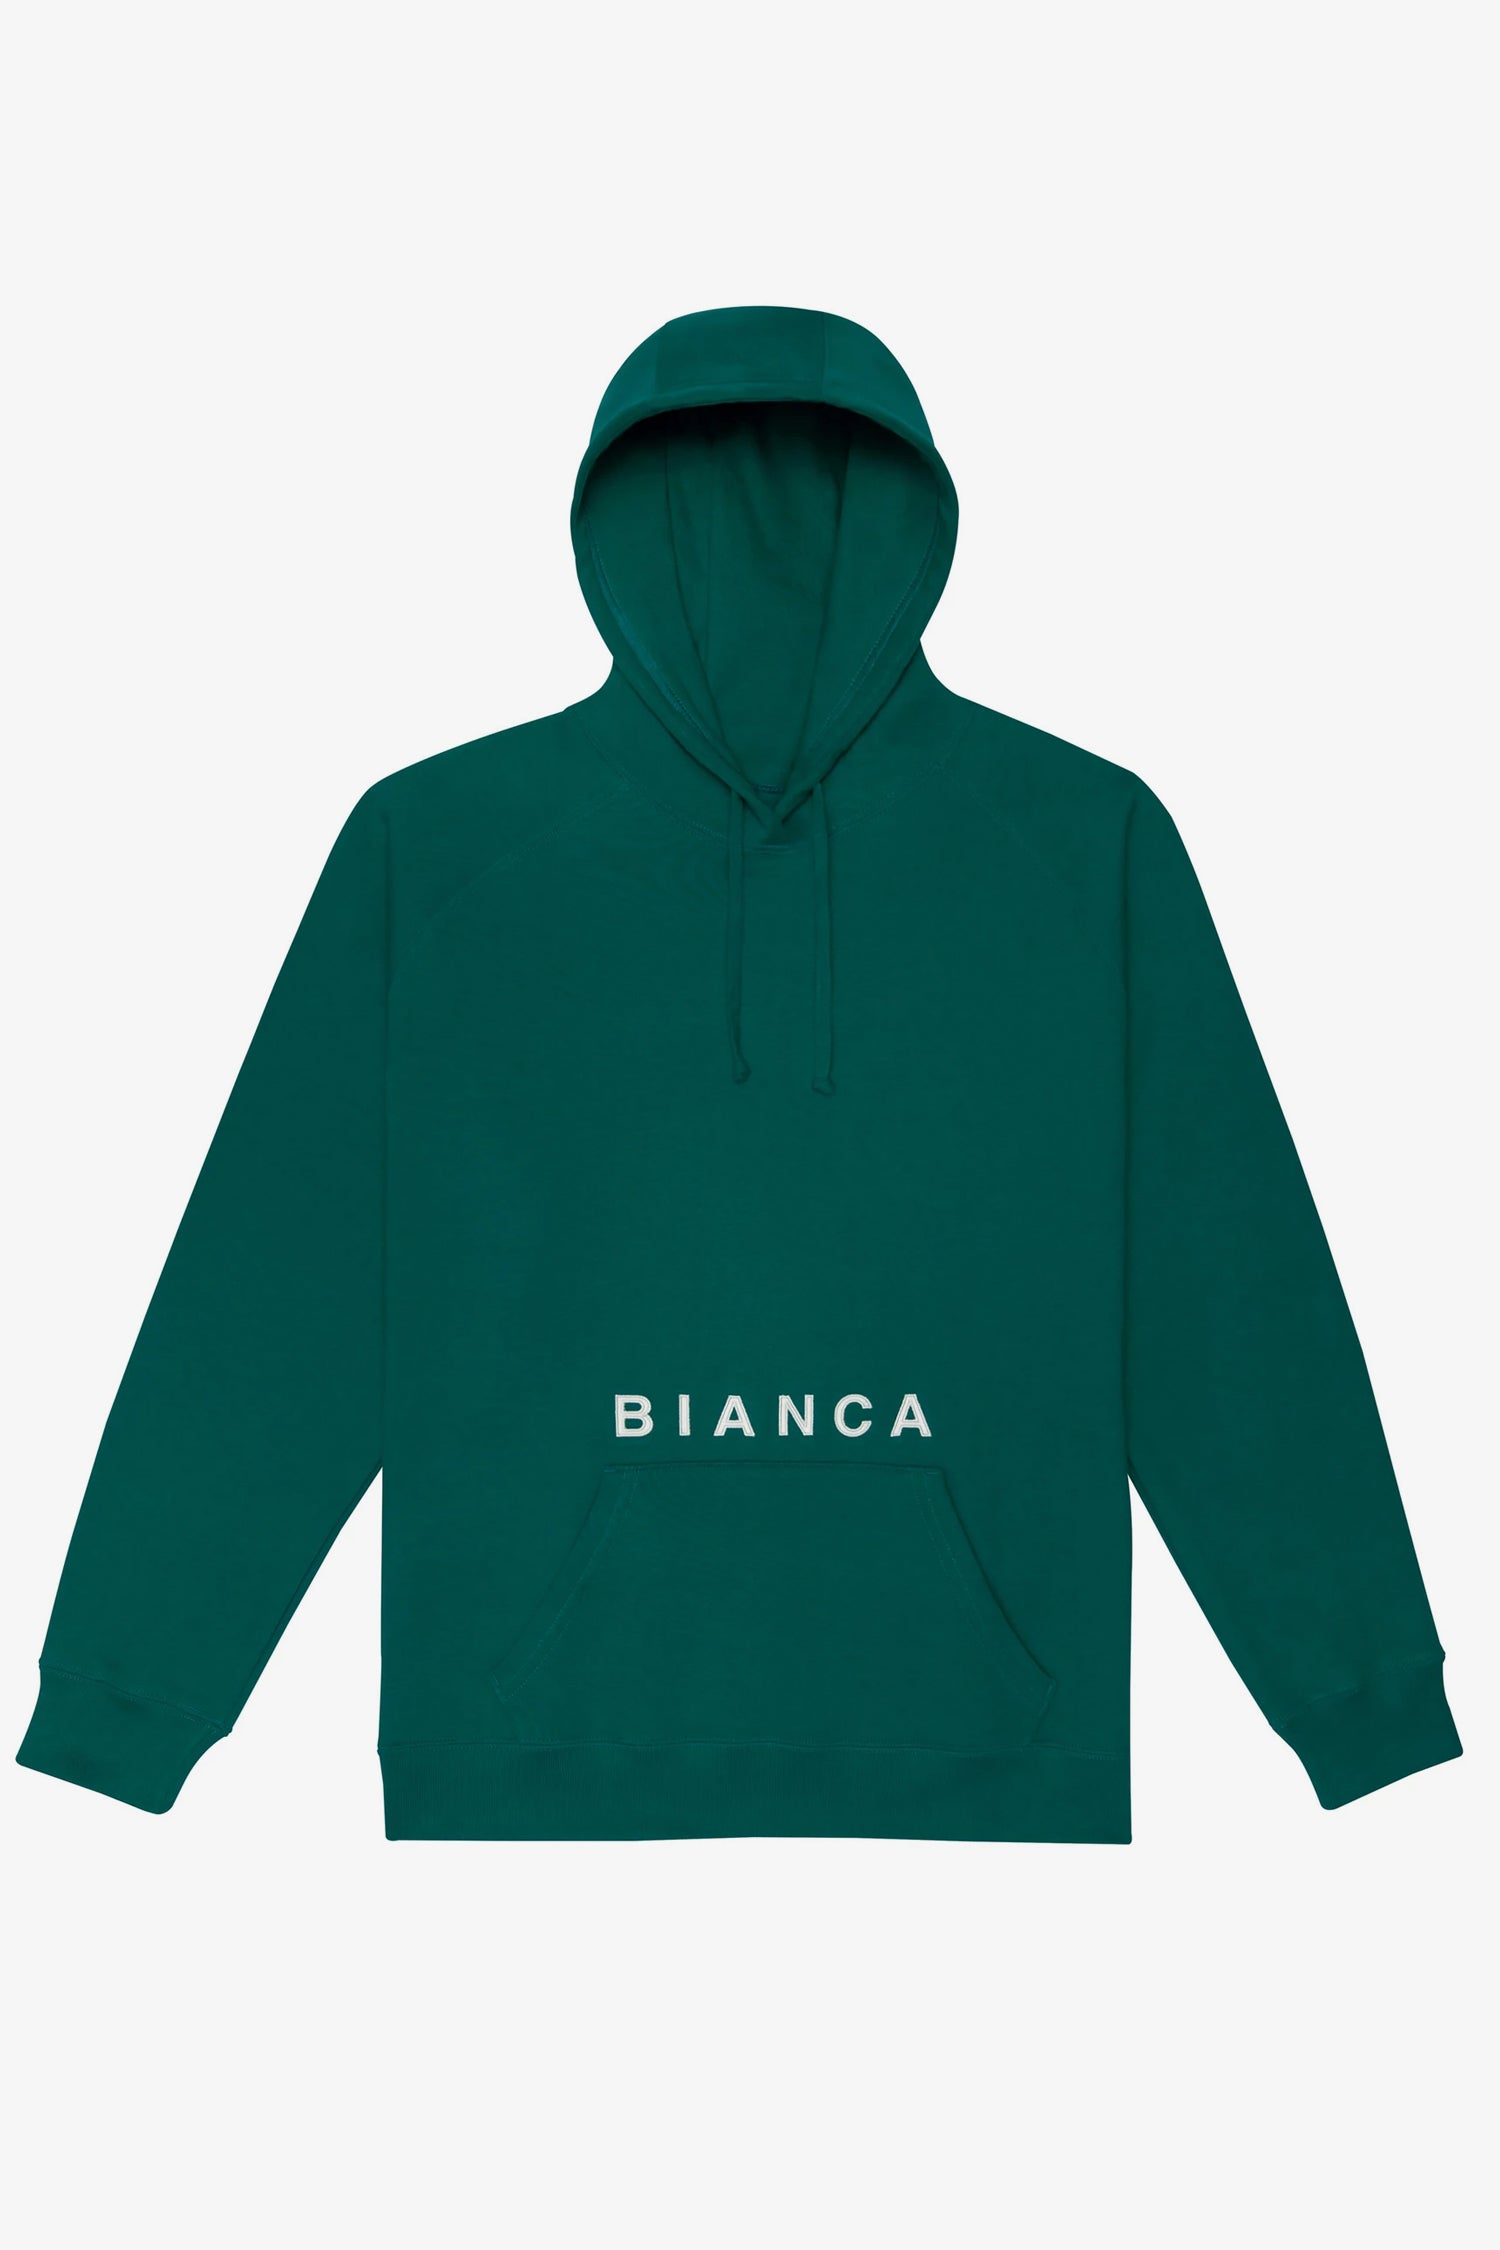 Selectshop FRAME - BIANCA CHANDON Bianca Hoodie Sweatshirt Dubai